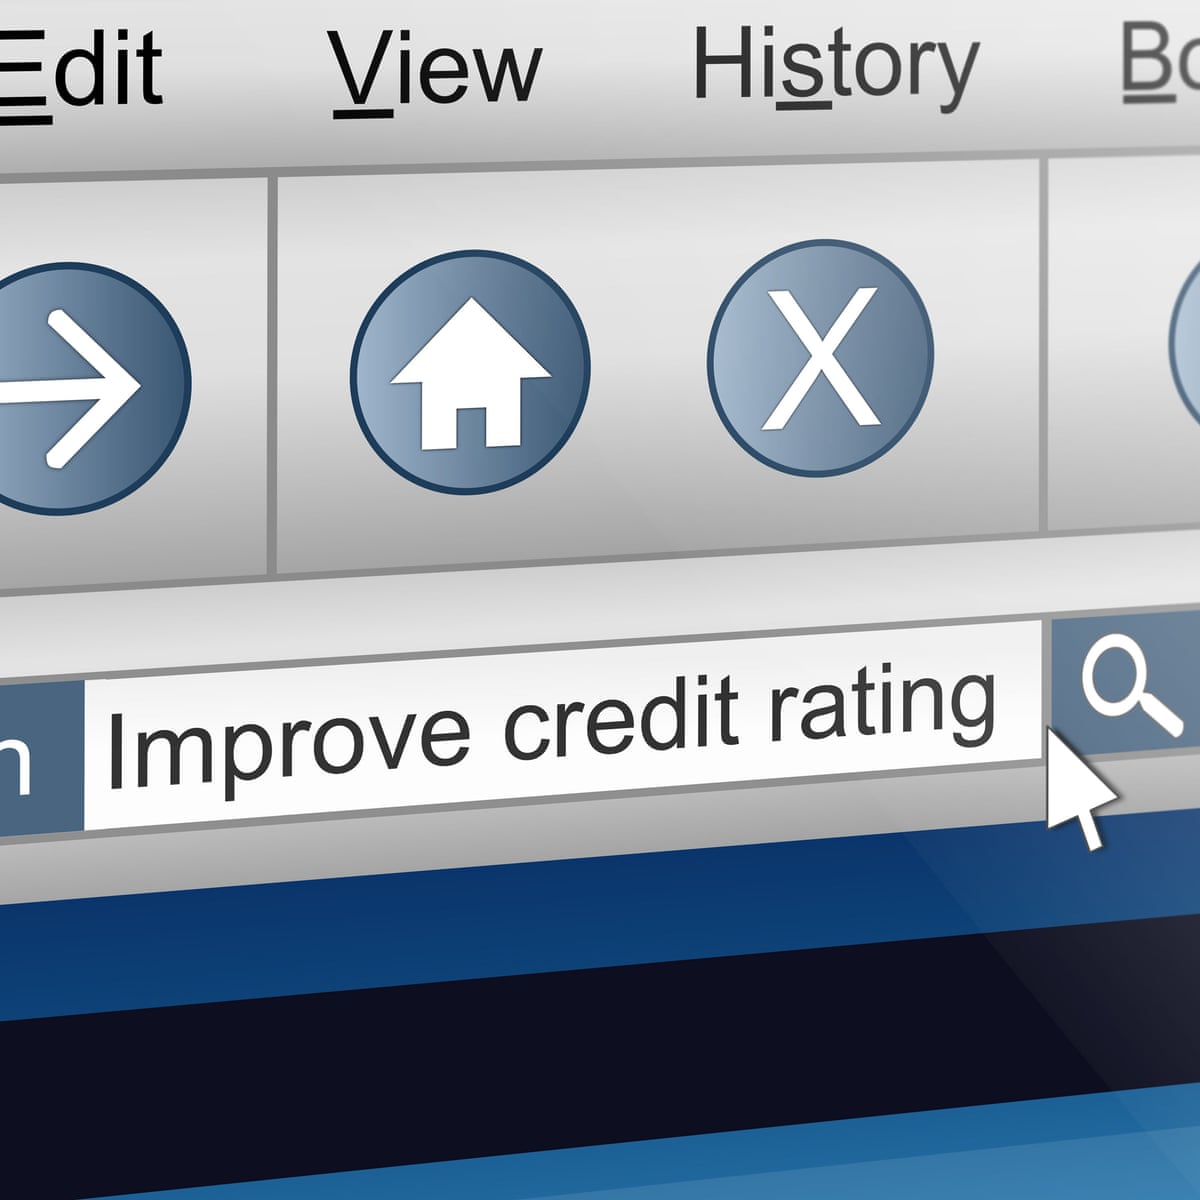 My credit rating